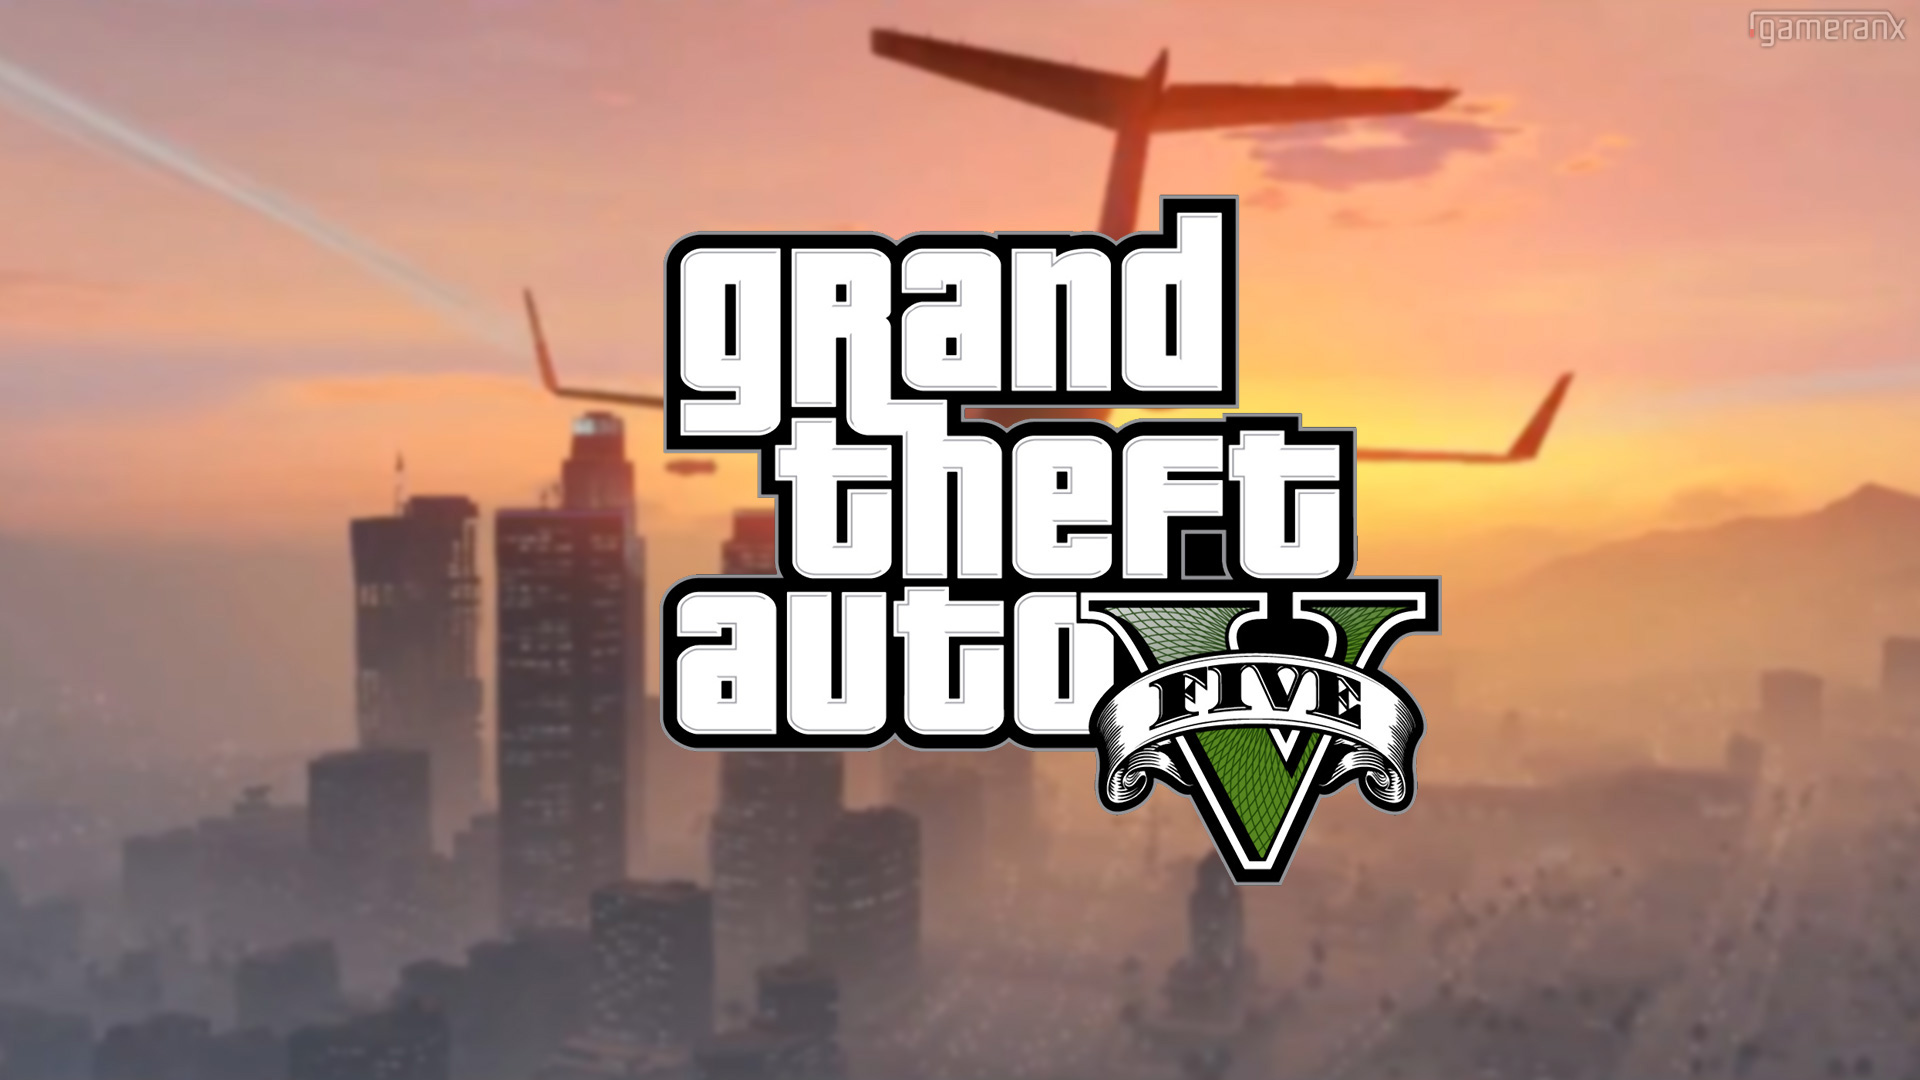 Grand Theft Auto V, Grand Theft Auto, Video Games Wallpaper